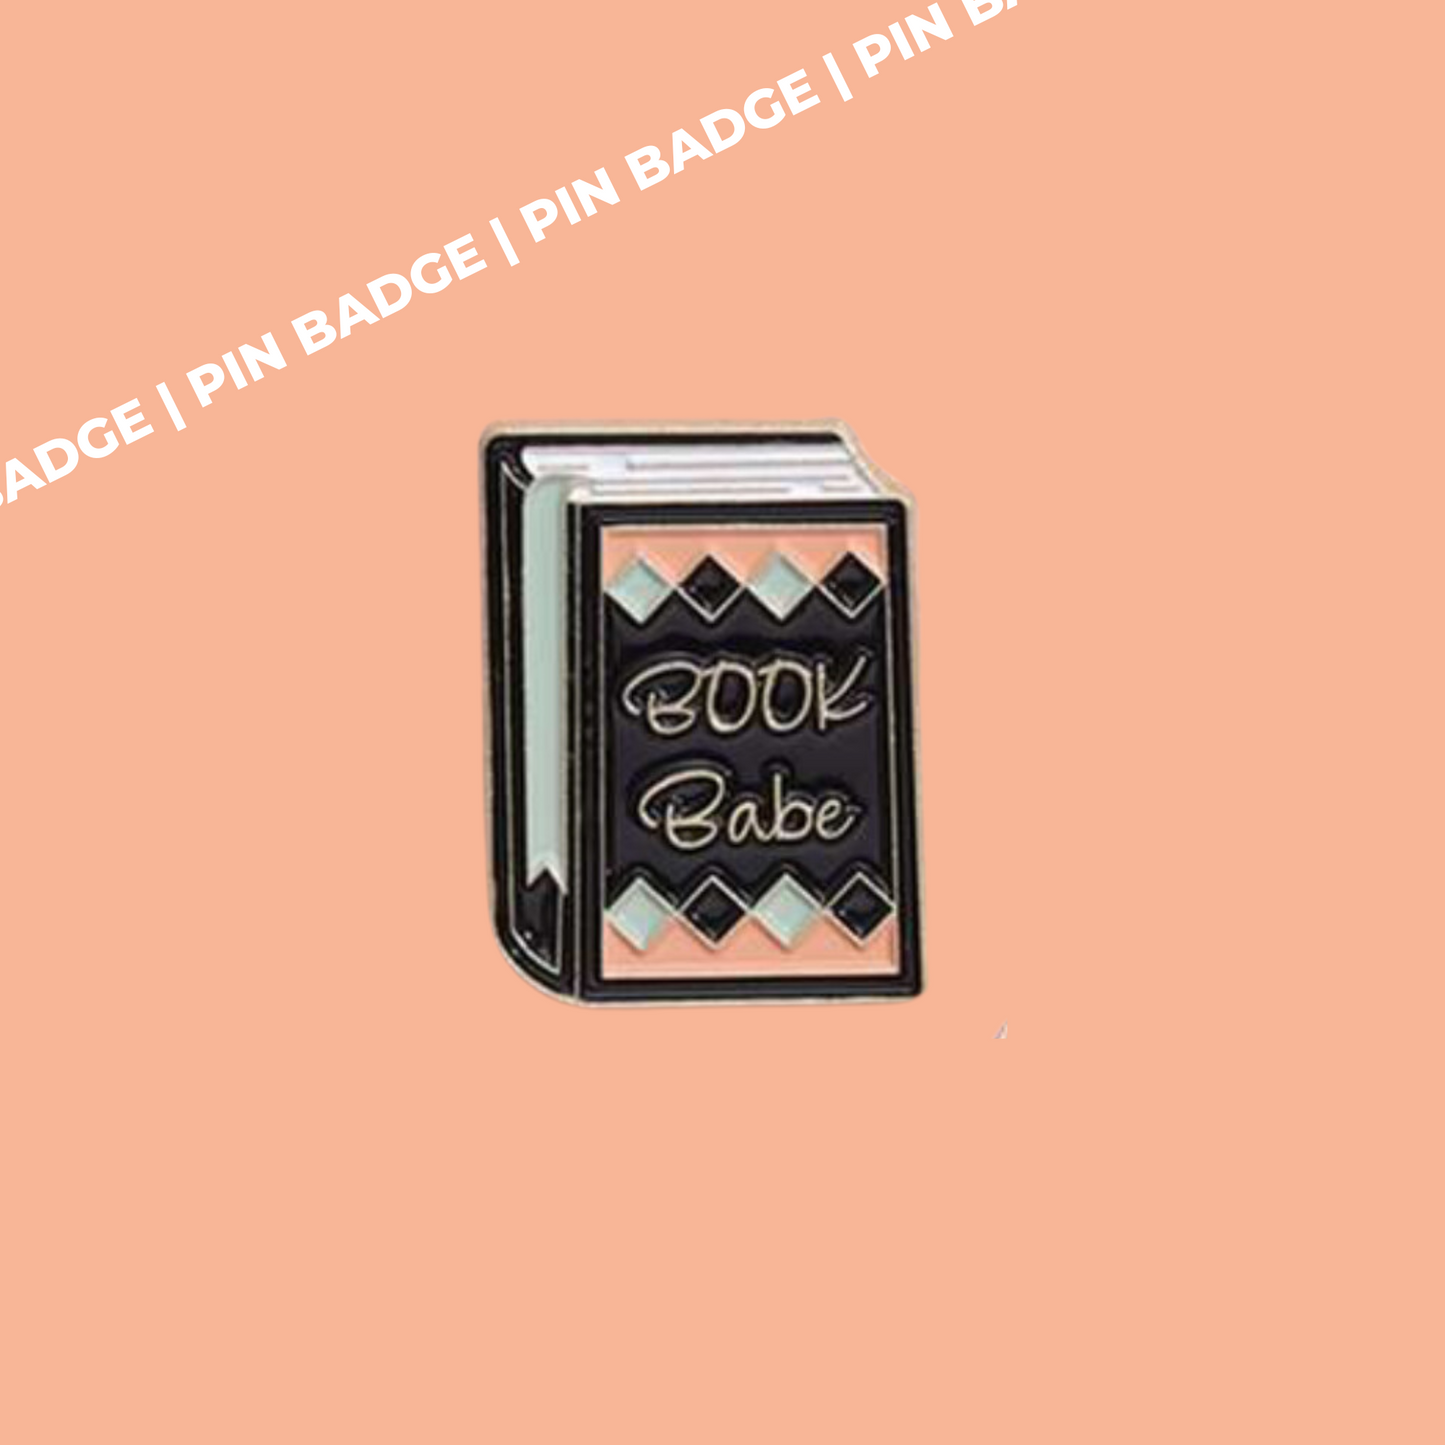 Book Babe Pin Badge